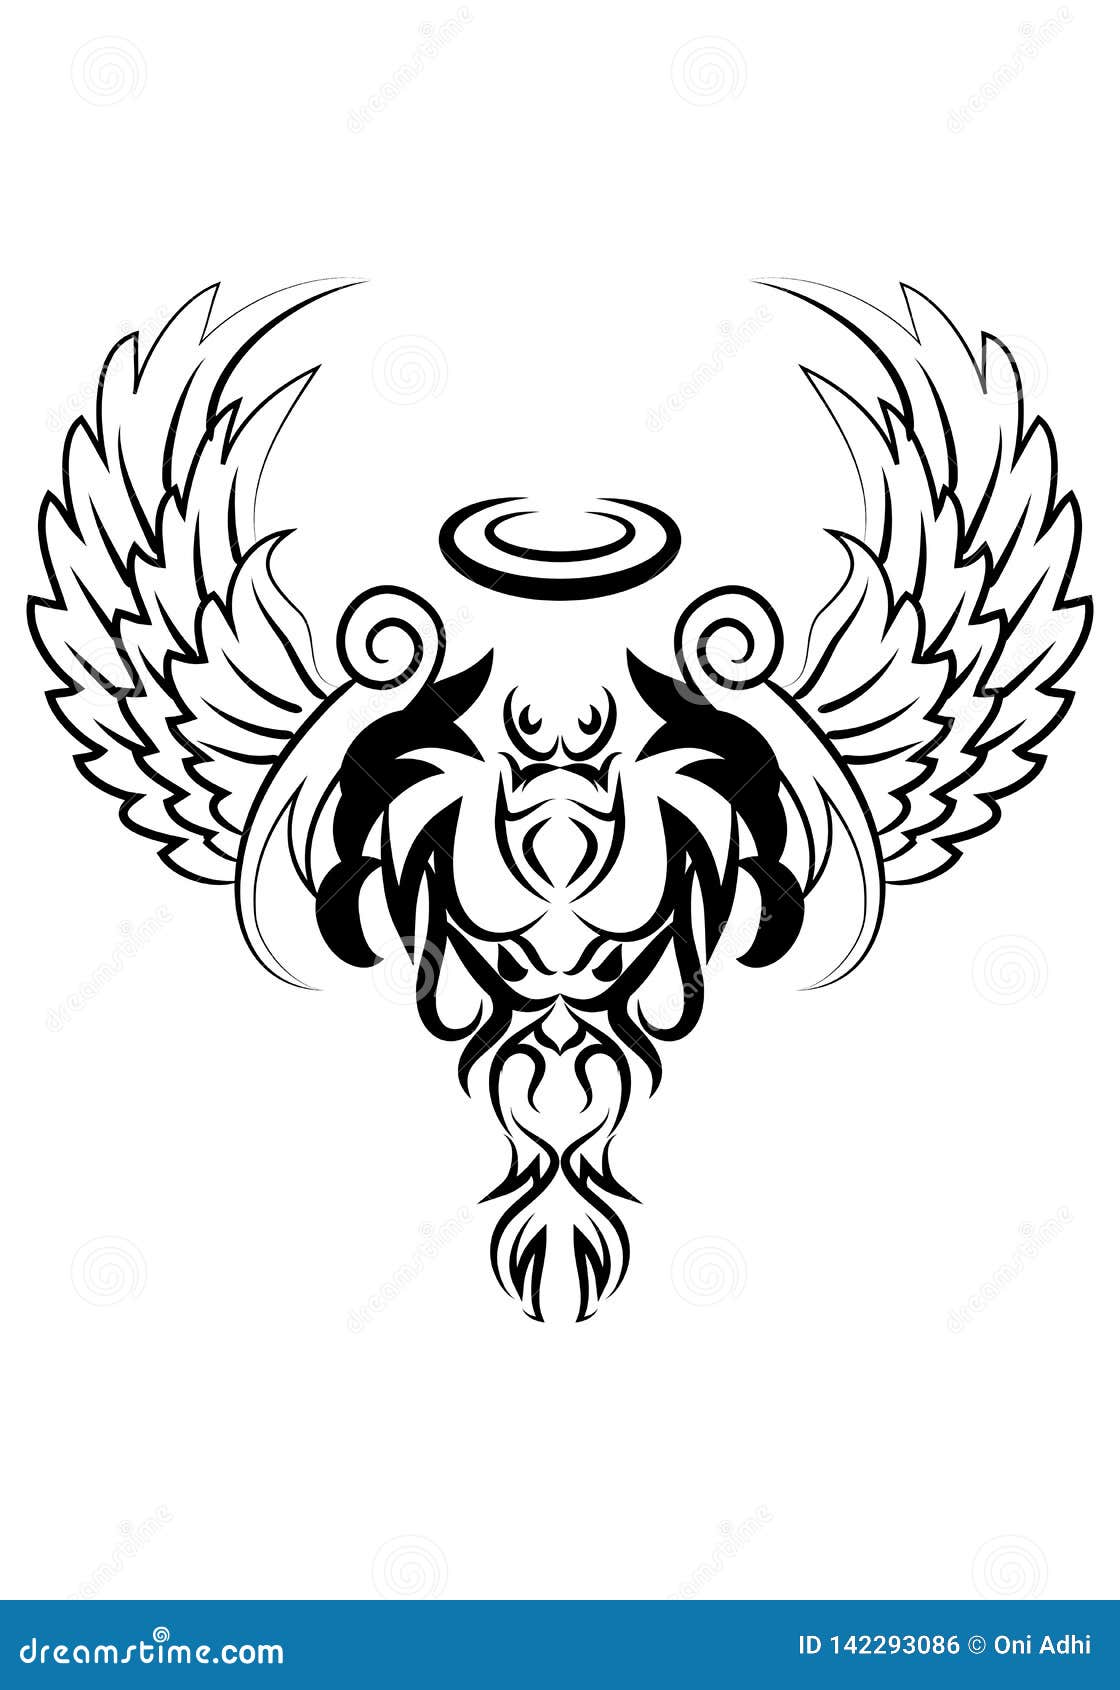 Devil Angel Wing Ornament Tattoo Stock Illustration - Illustration of tribal,  soul: 142293086